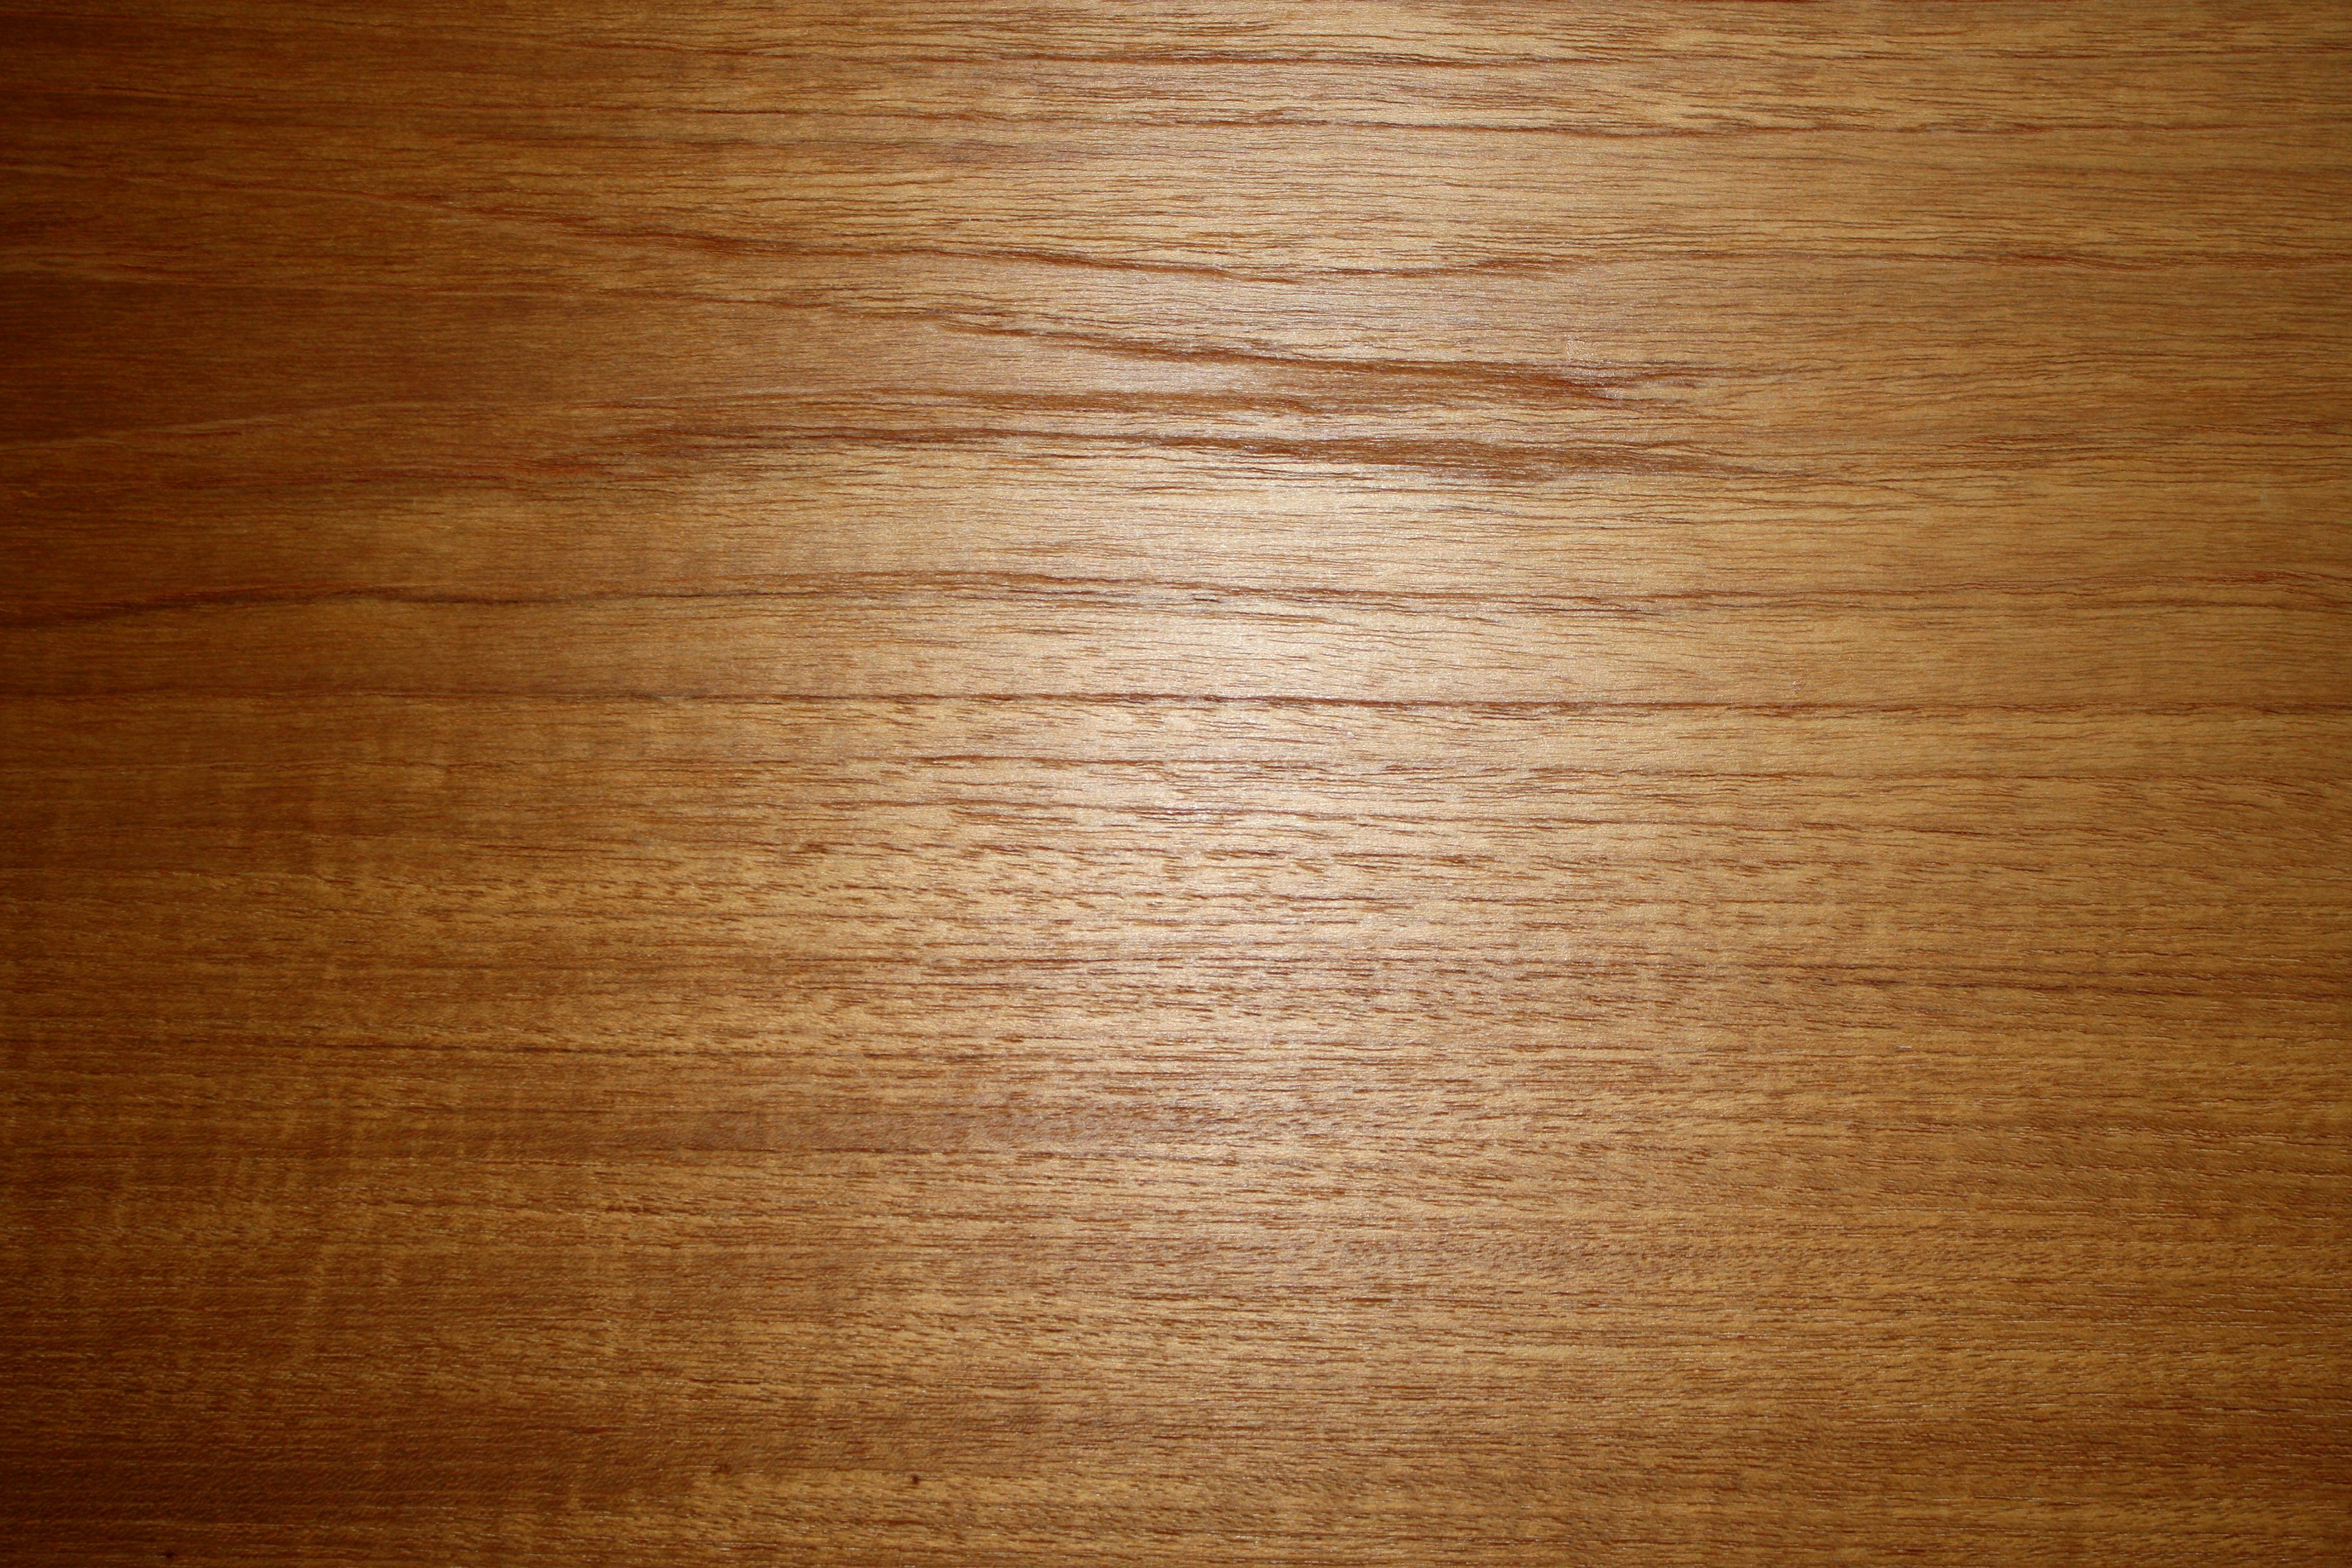 Wood Grain Texture High Resolution Photo Dimensions